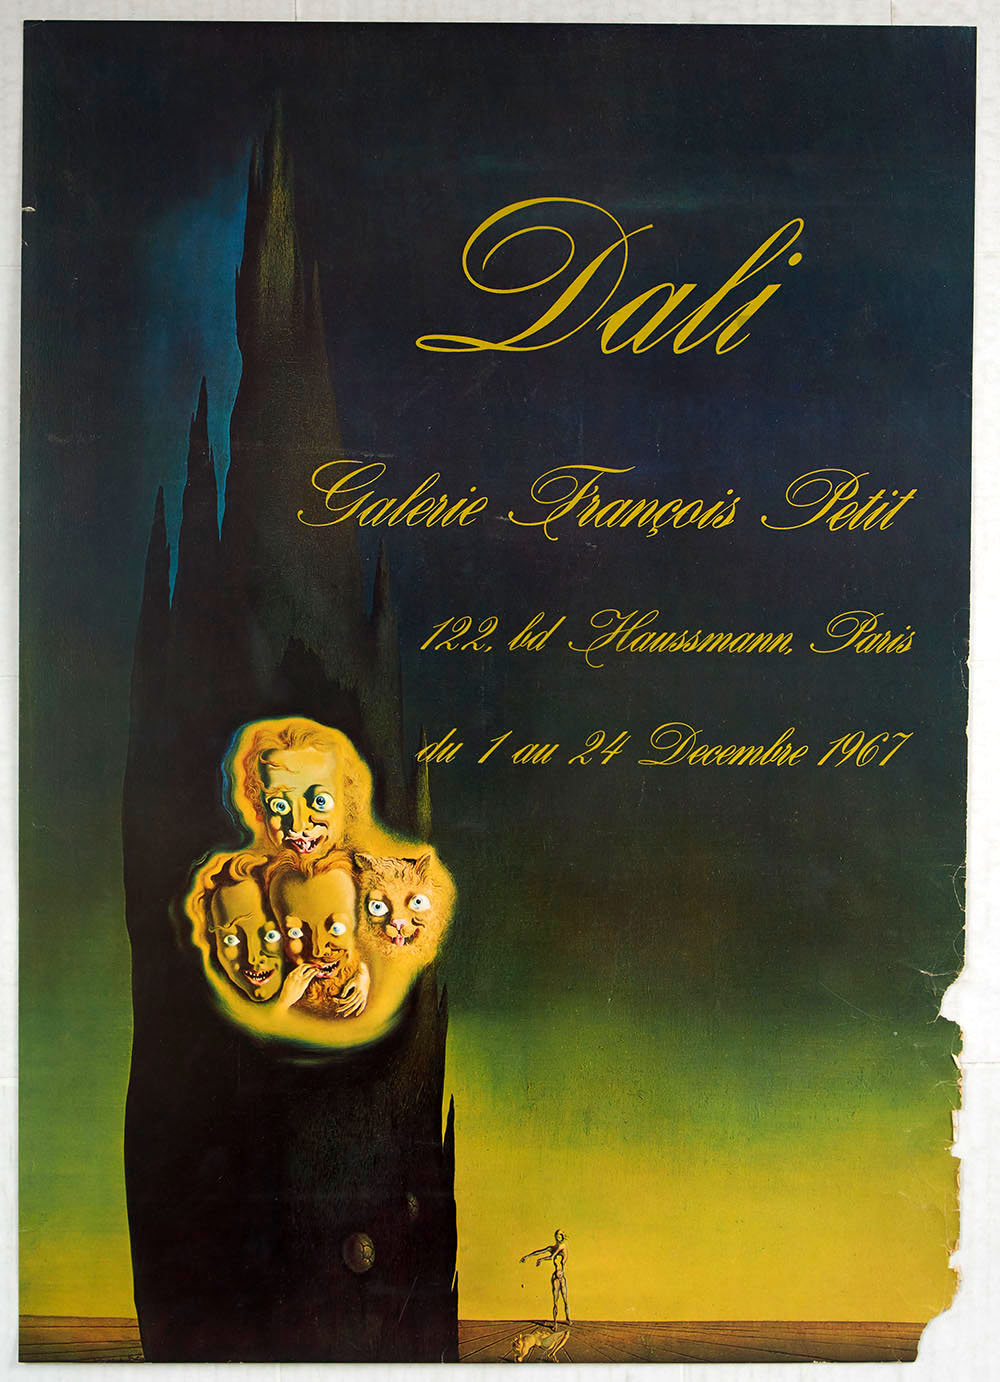 Advertising Poster Dali Galerie Francois Petit Paris